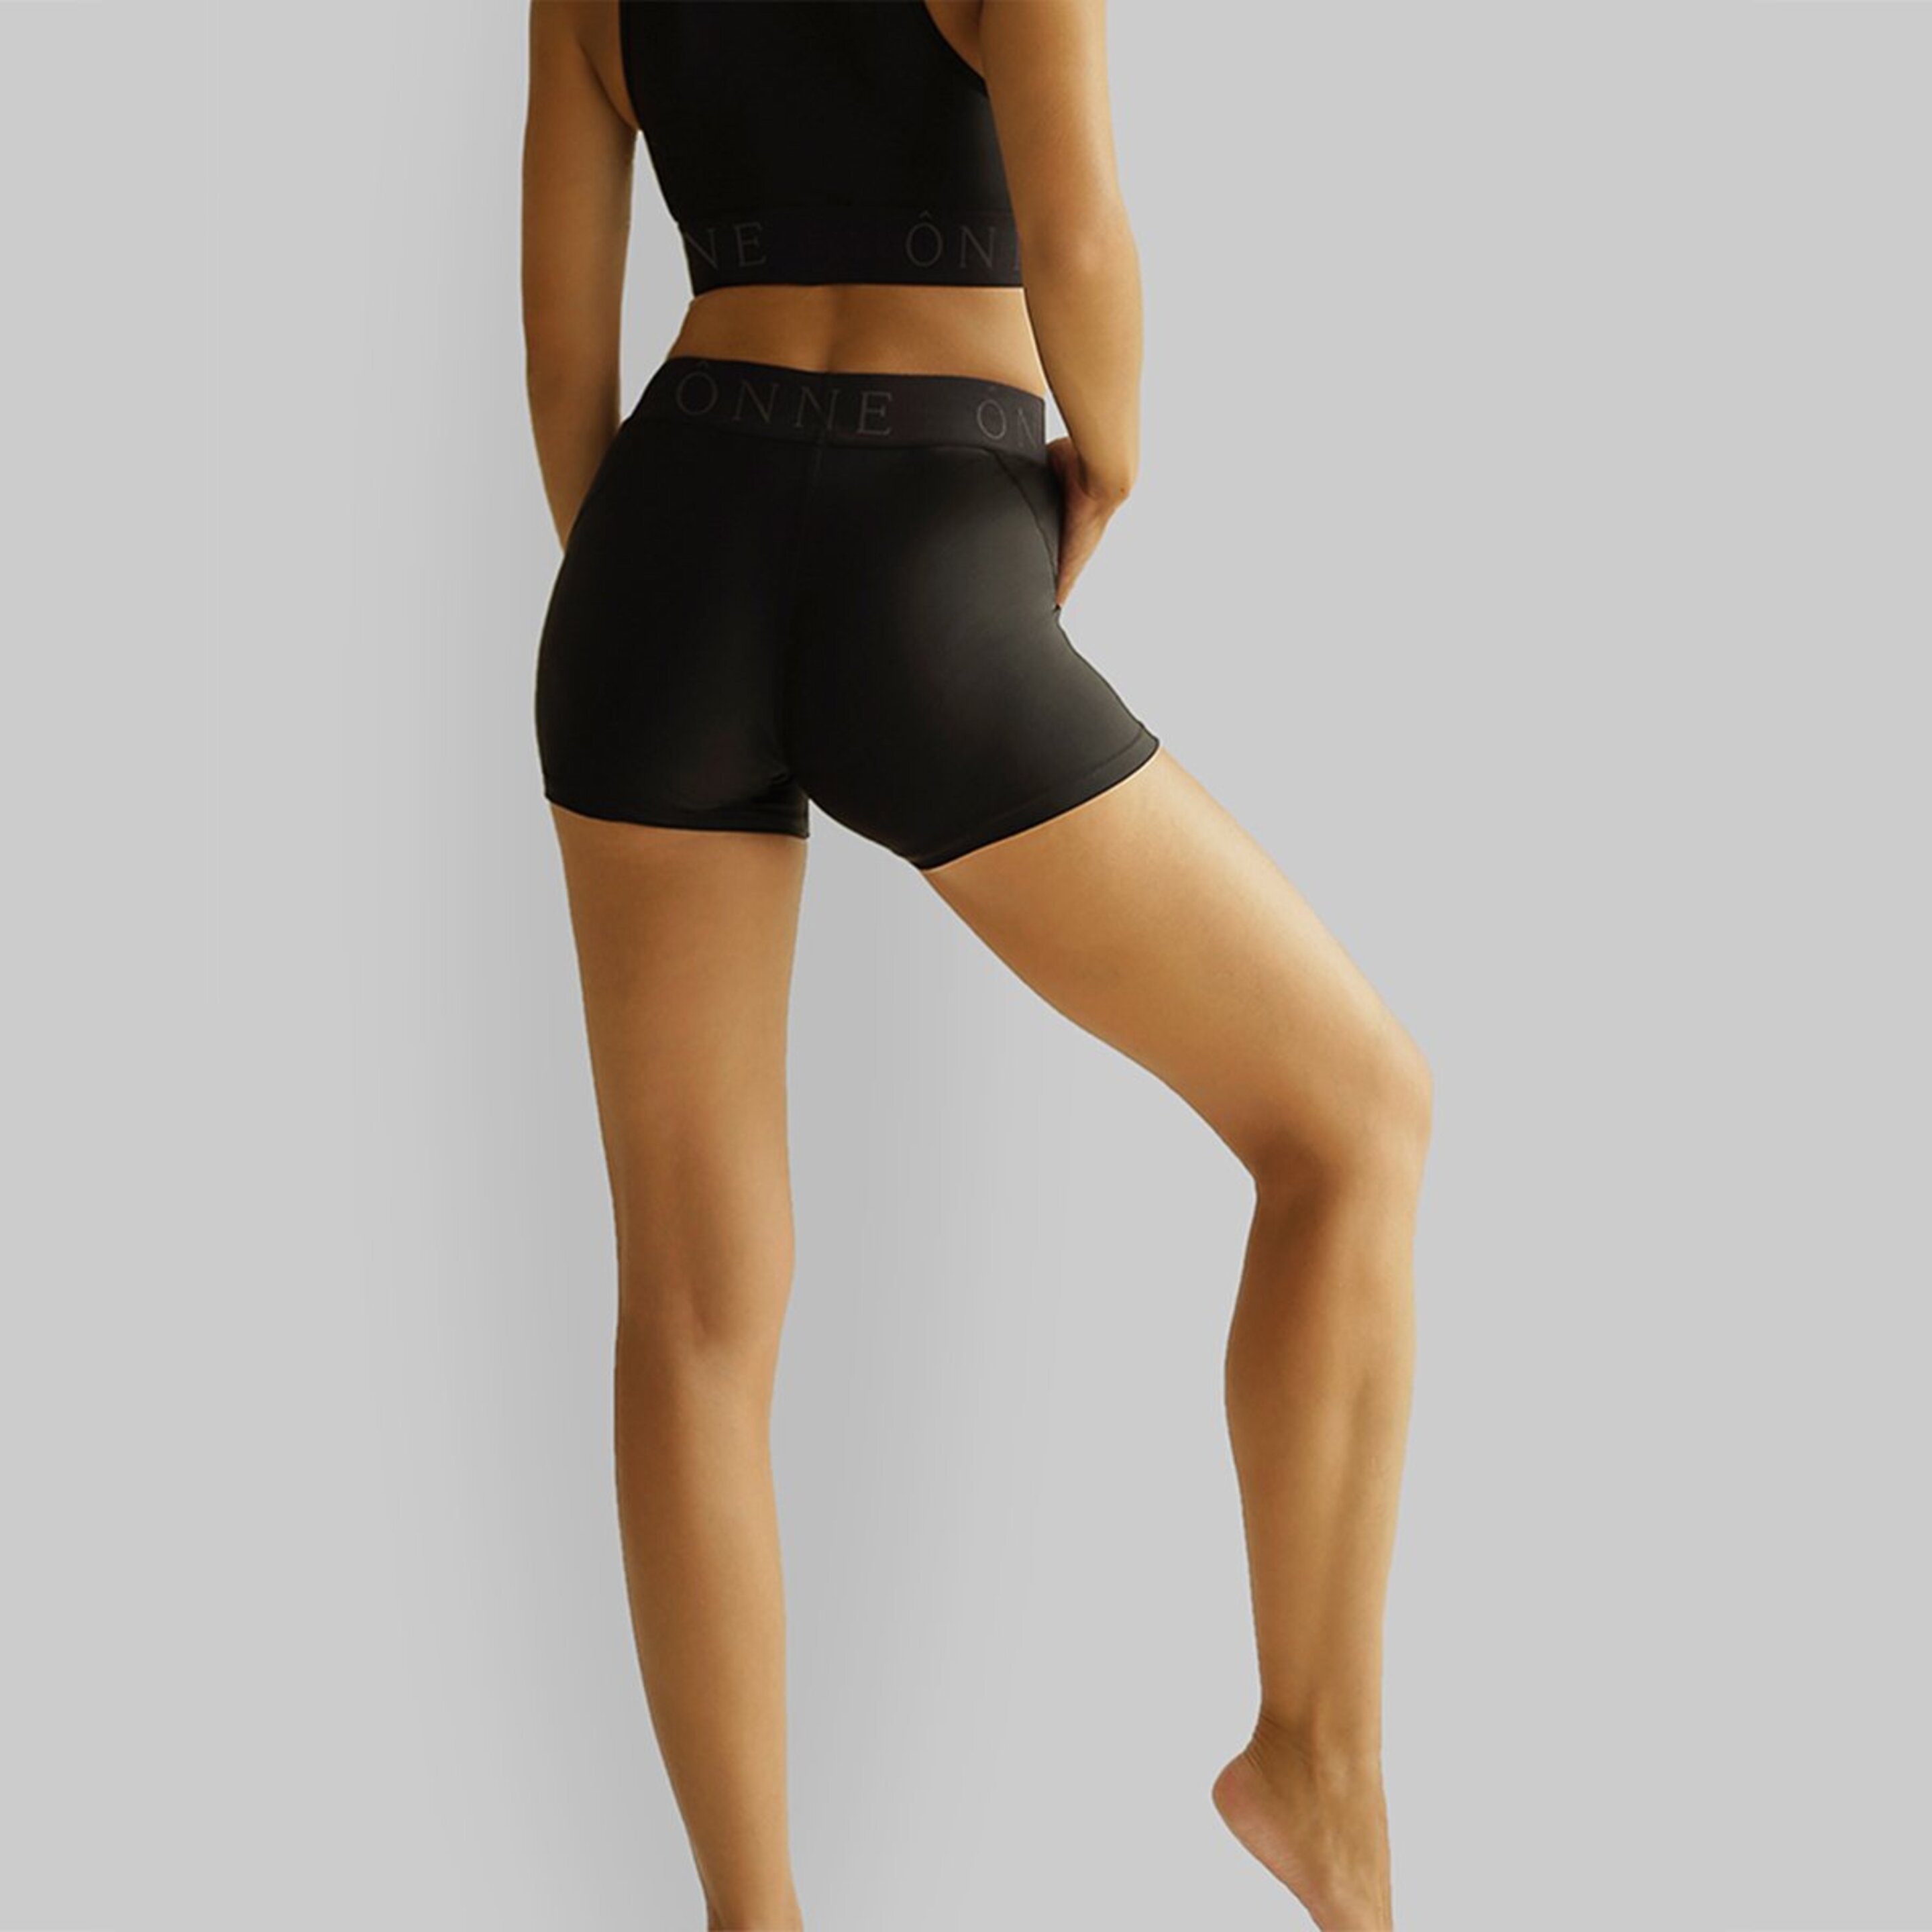 Mallas Cortas ônne Idaly Shorts - Negro - Yoga Mujer  MKP